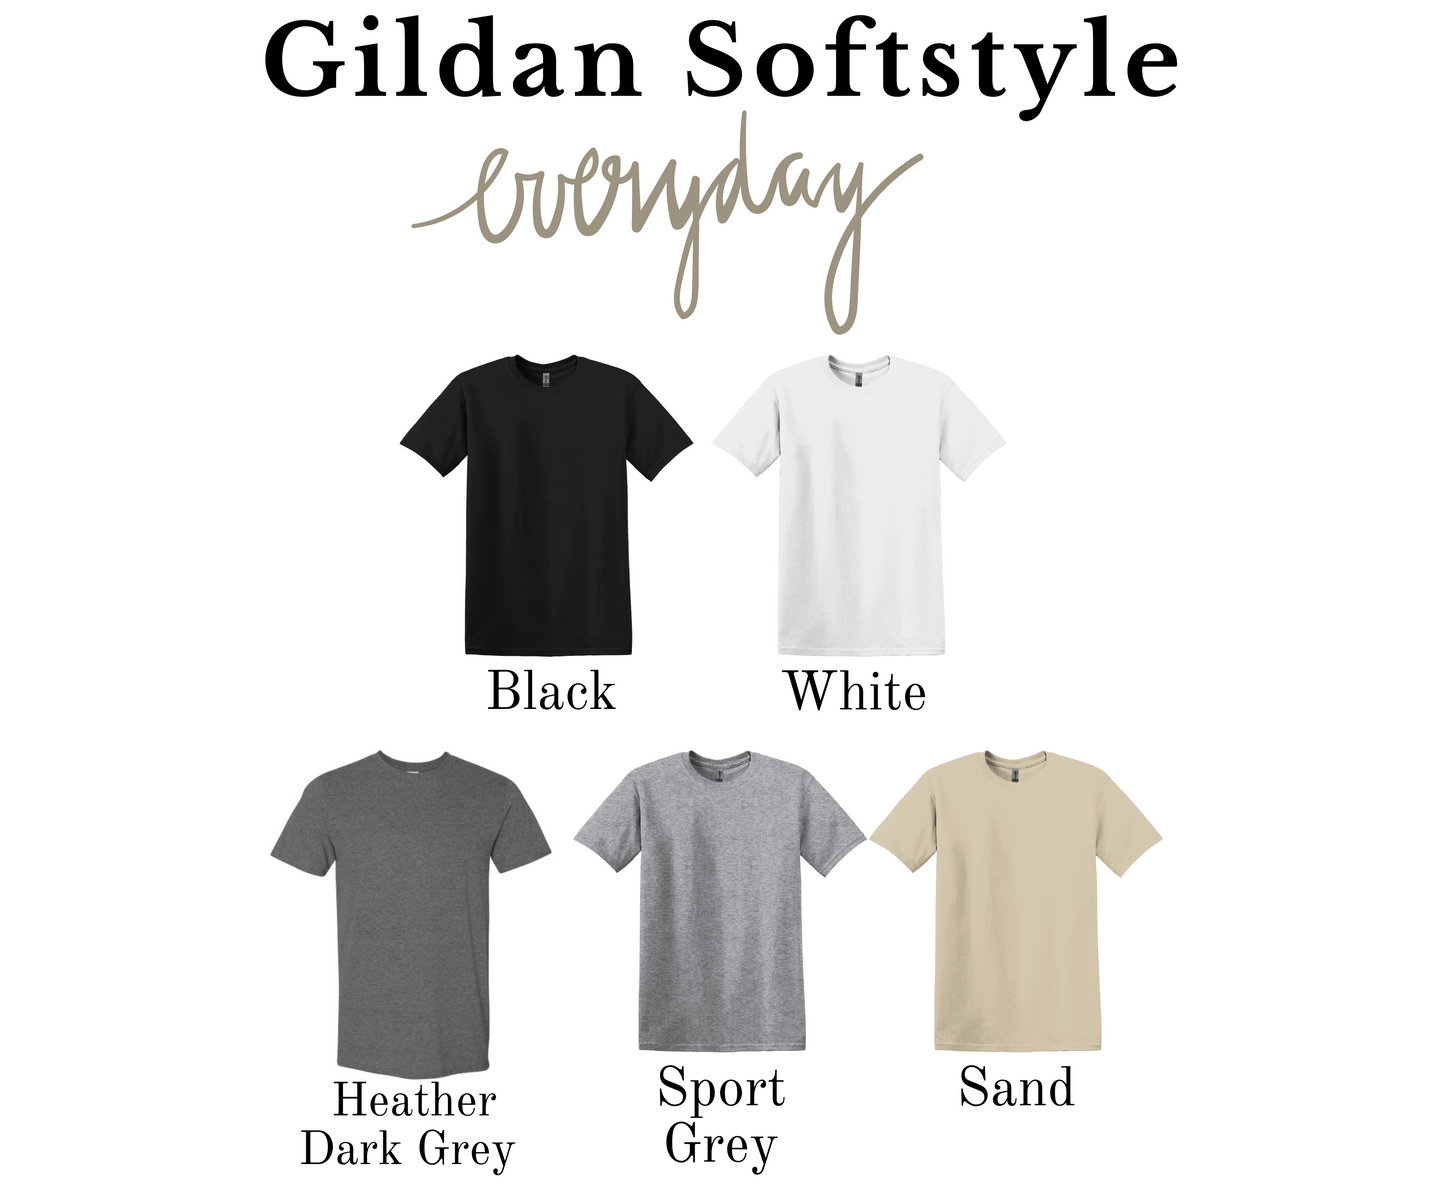 100 Percent That Witch Shirt Gildan Sofstyle T-shirt